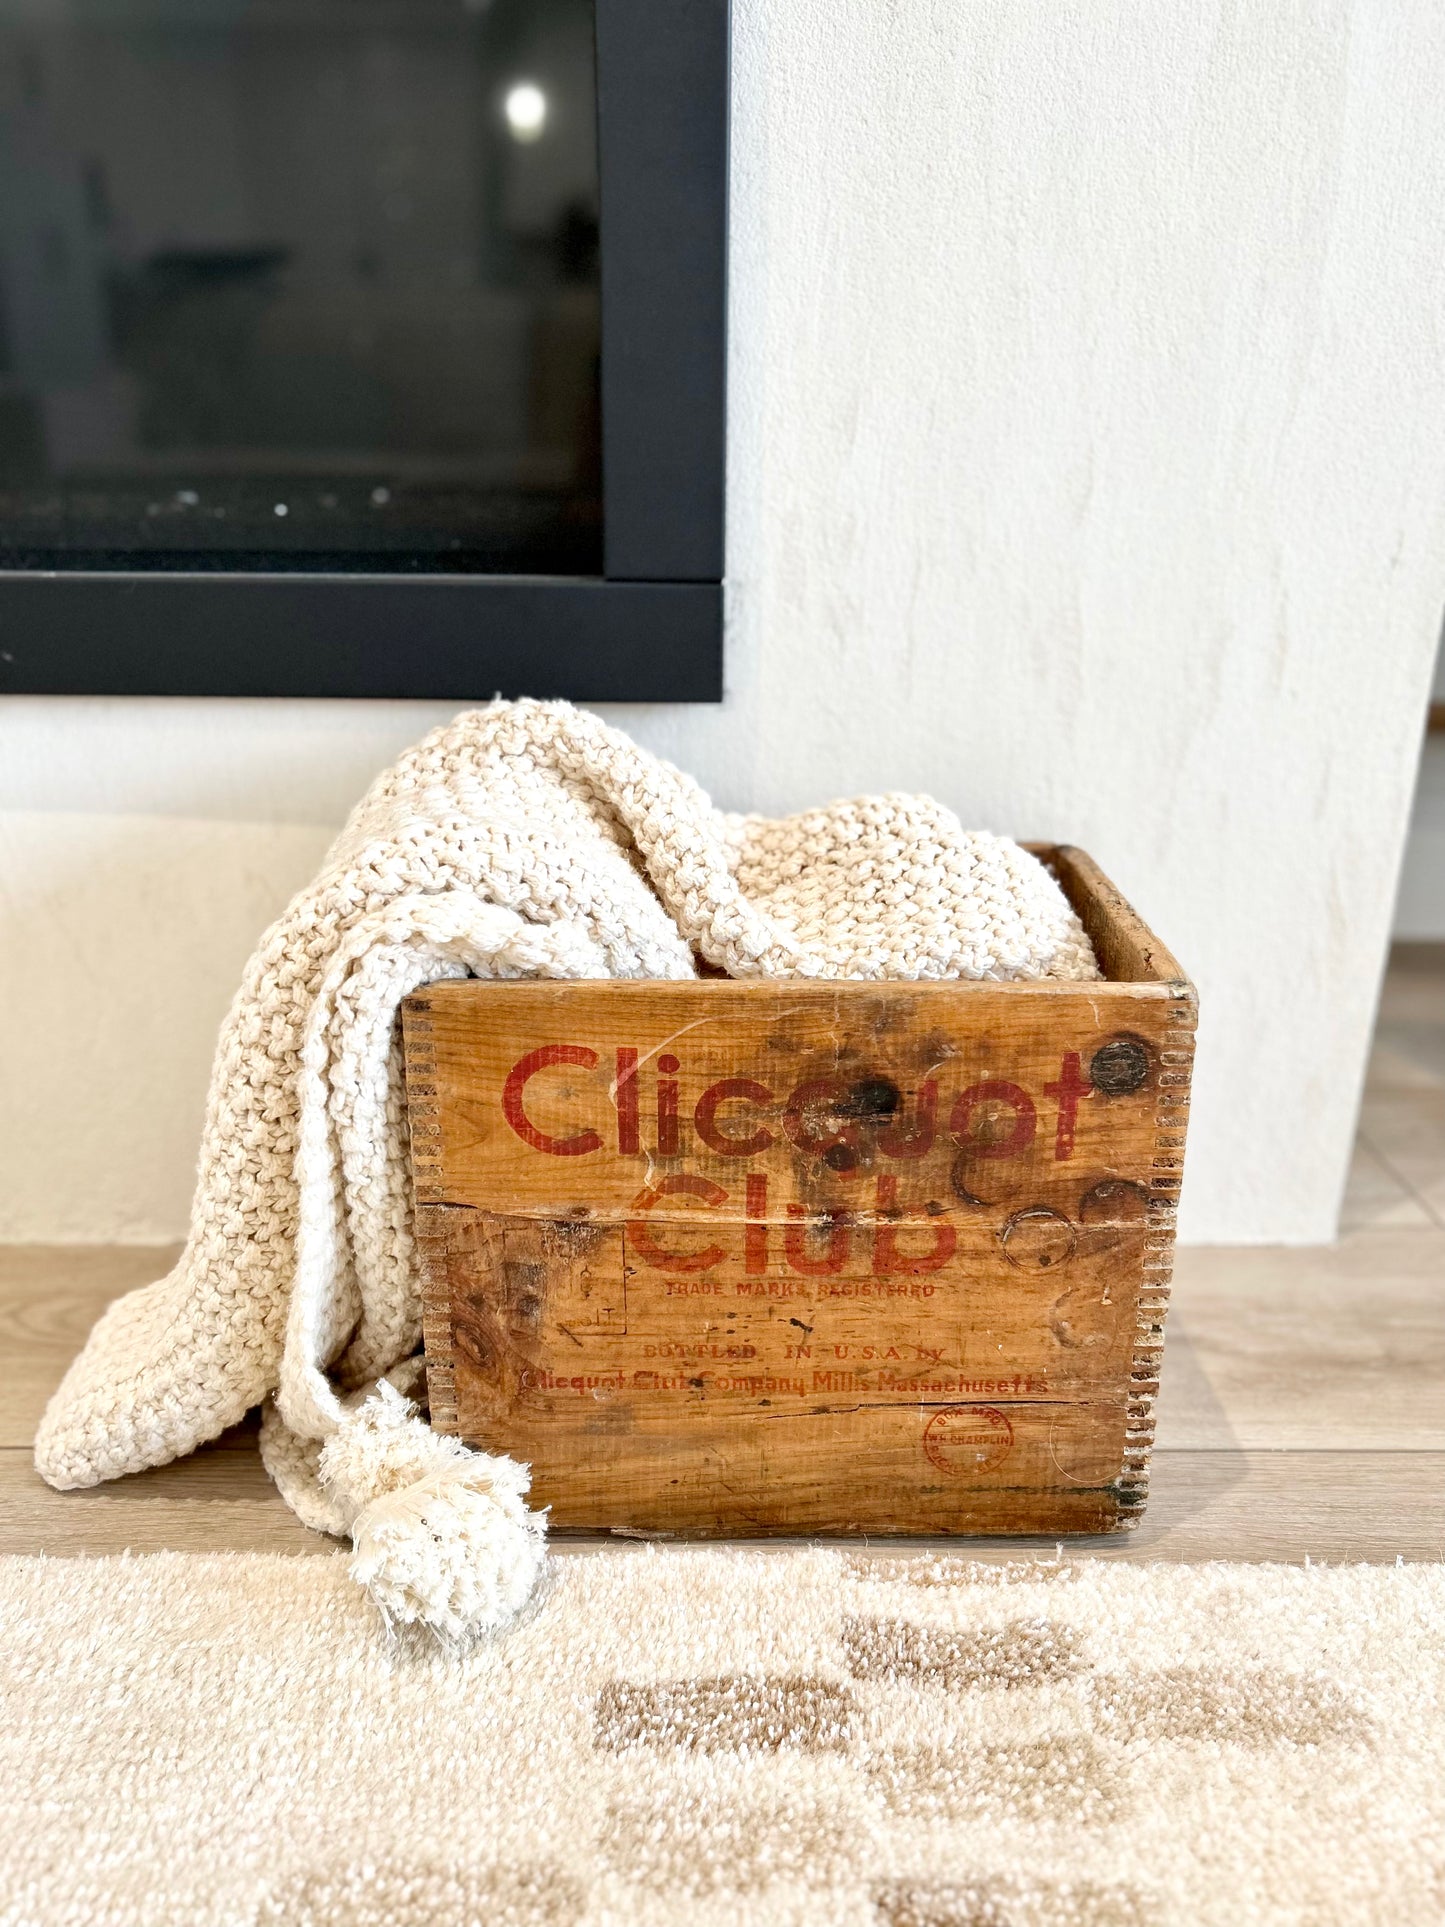 Clicquot Wooden Crate